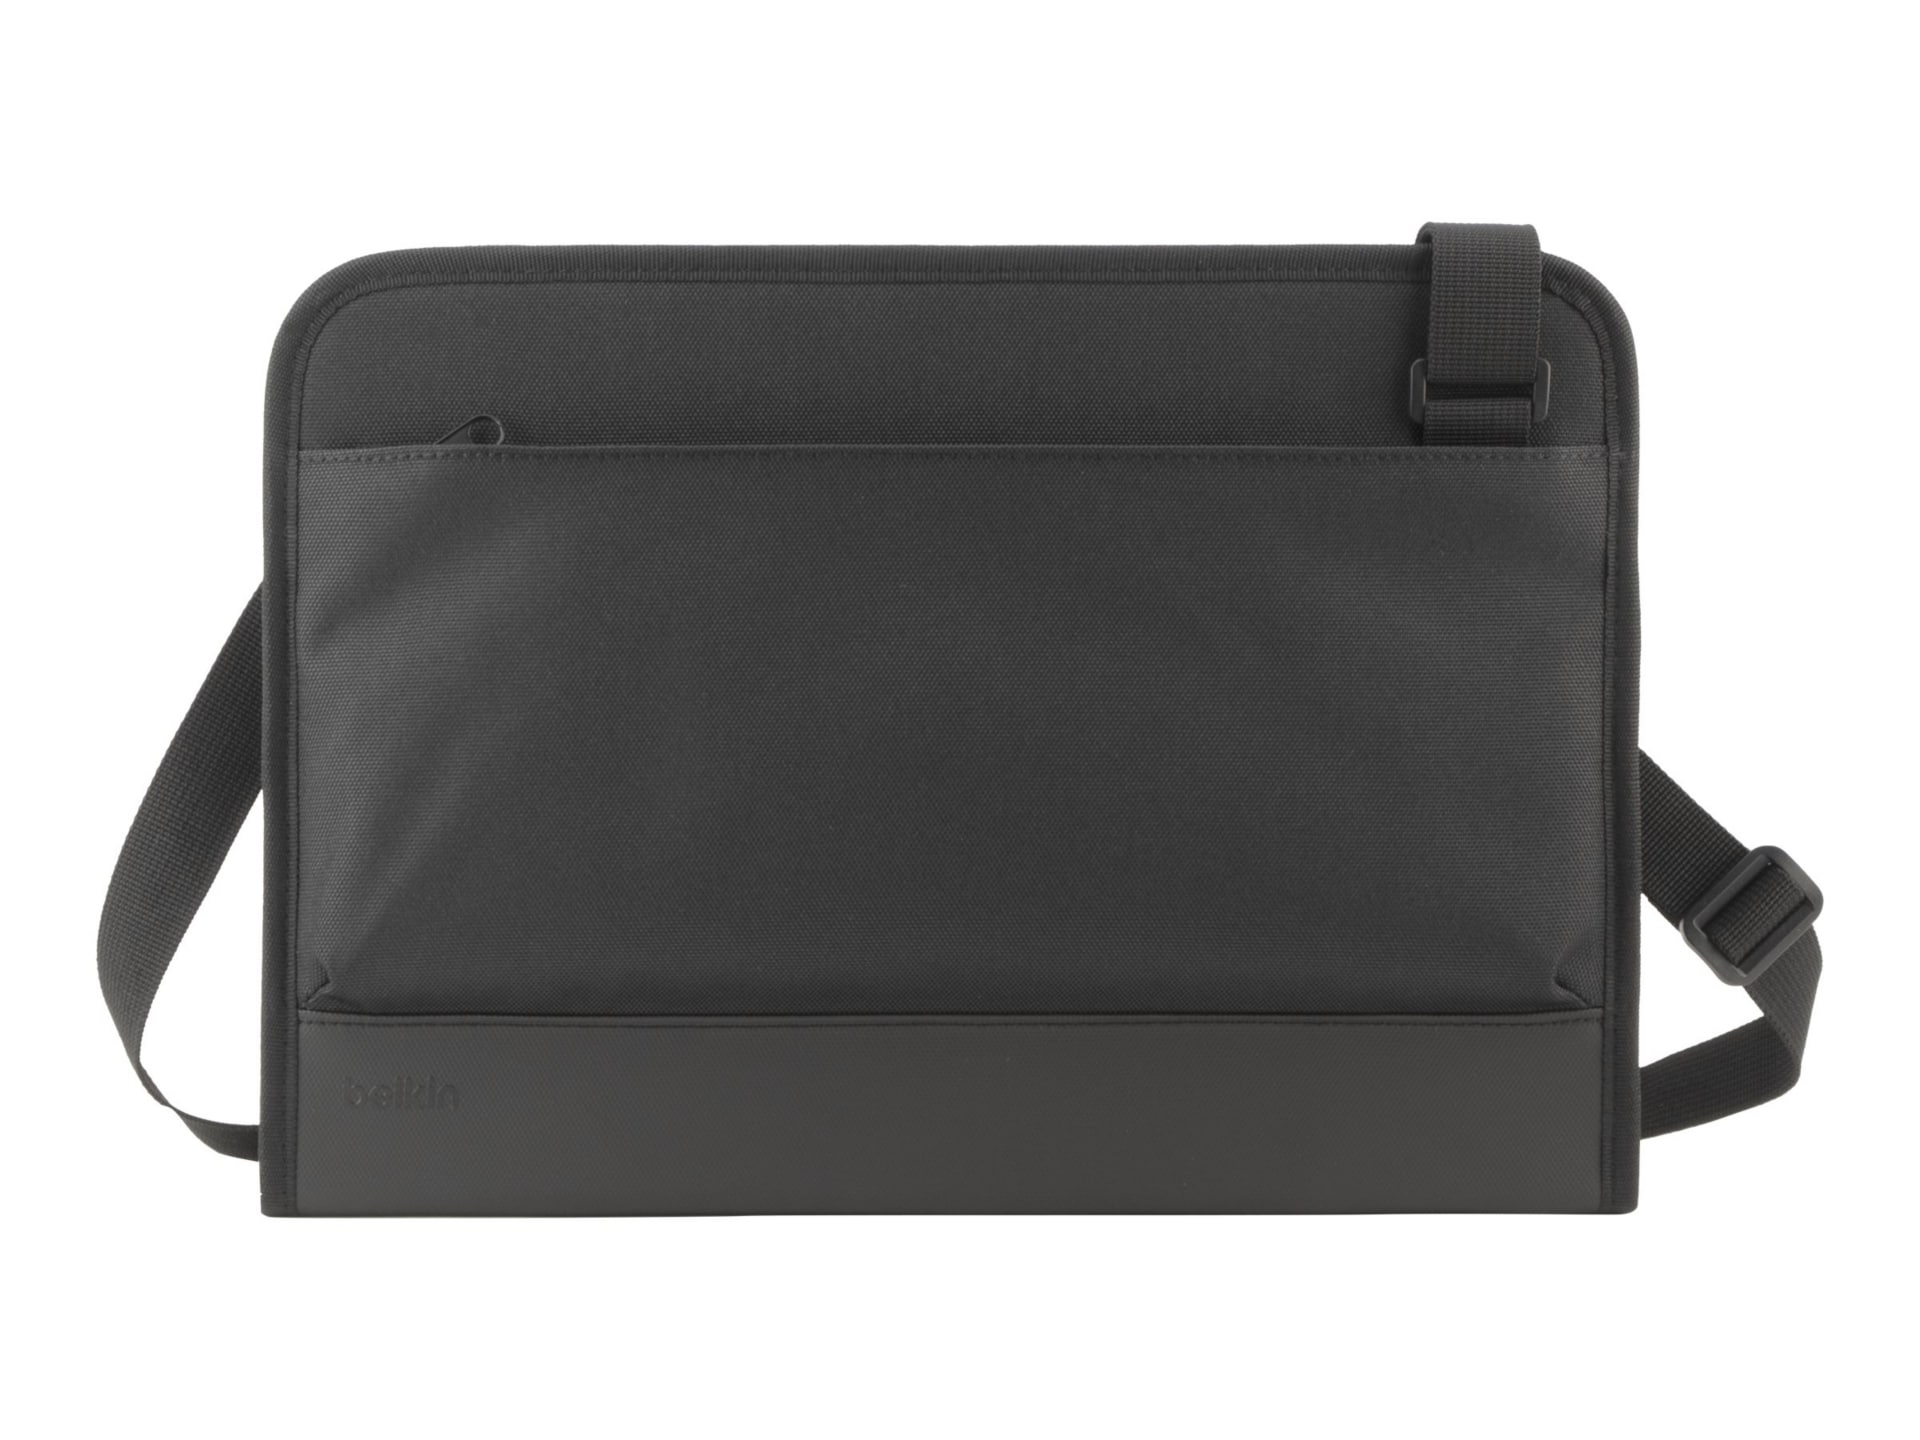 Belkin 11/12 Inch Laptop Case - 11” - 12" Always On Laptop Sleeve with Carrying Shoulder Strap - Black